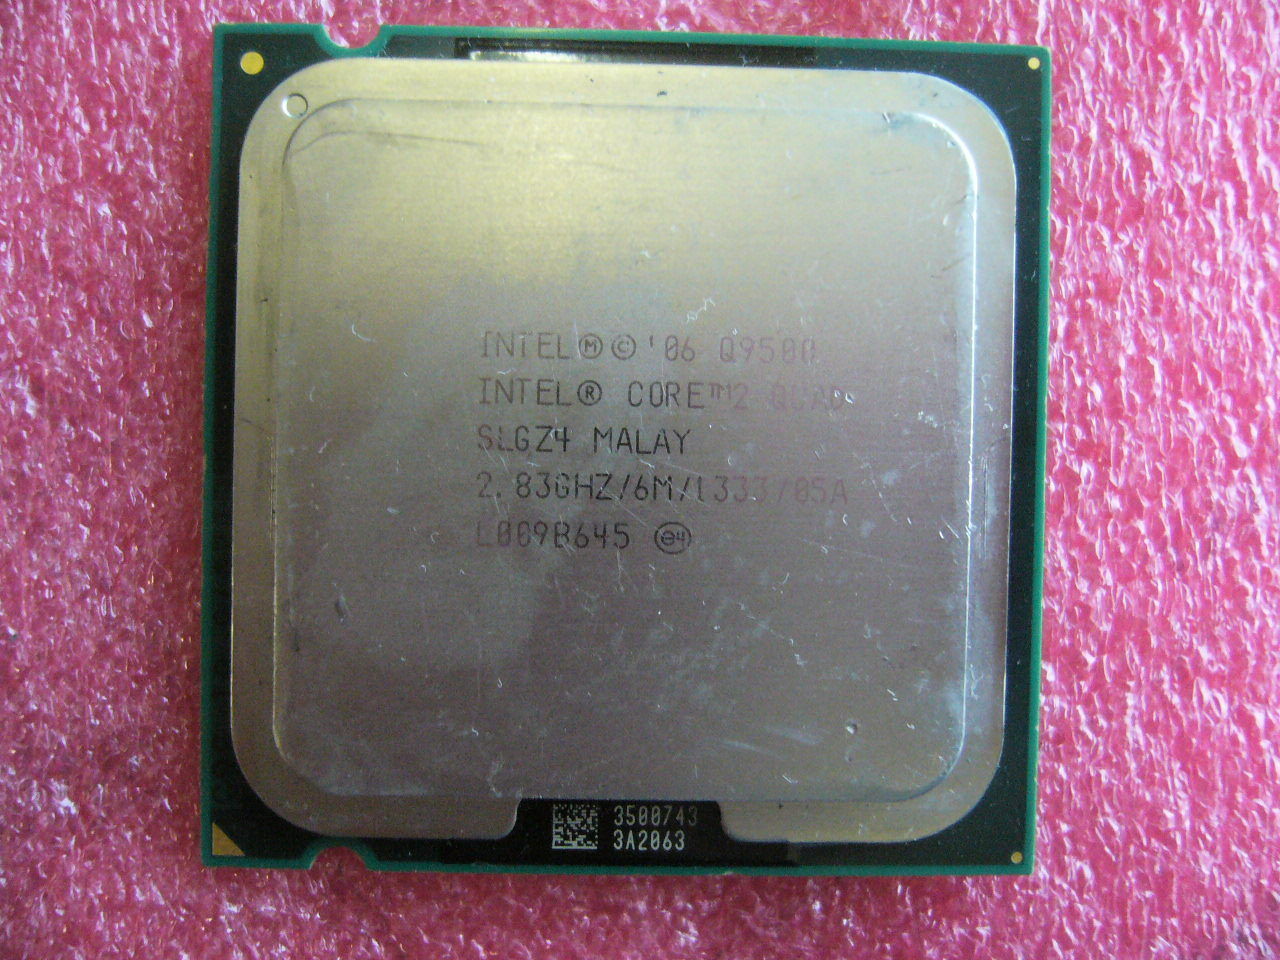 QTY 1x INTEL Quad Cores Q9500 CPU 2.83GHz/6MB/1333Mhz LGA775 SLGZ4 - Click Image to Close